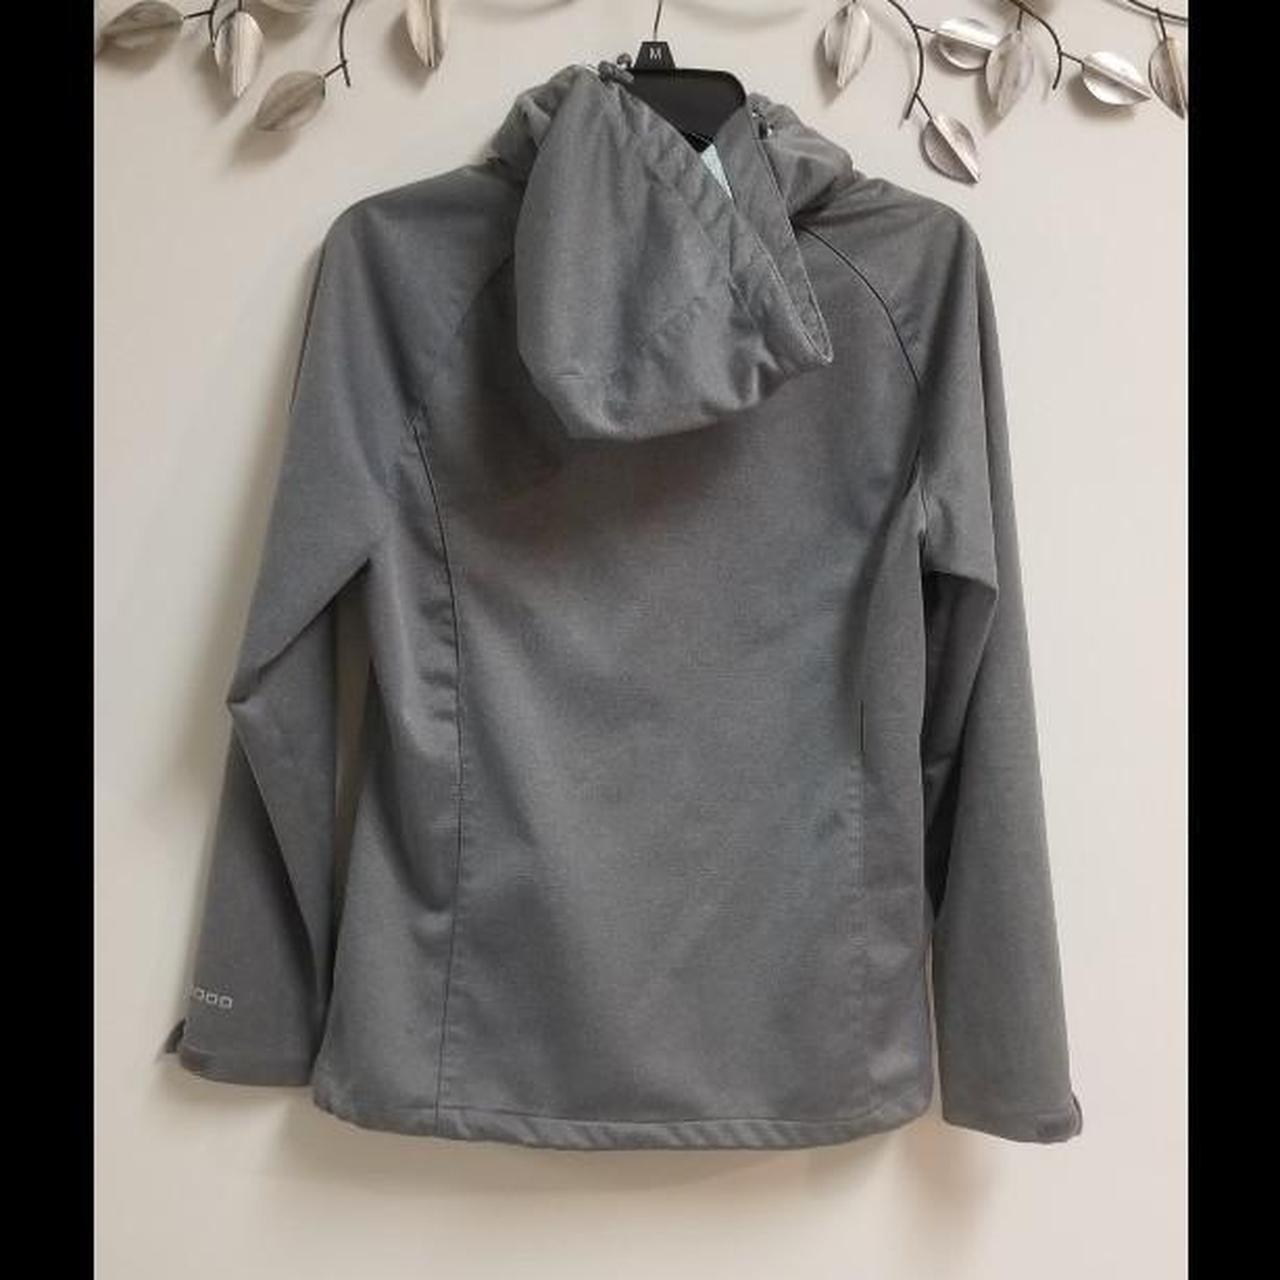 Product Image 2 - Trespass jacket.
Soft shell and good